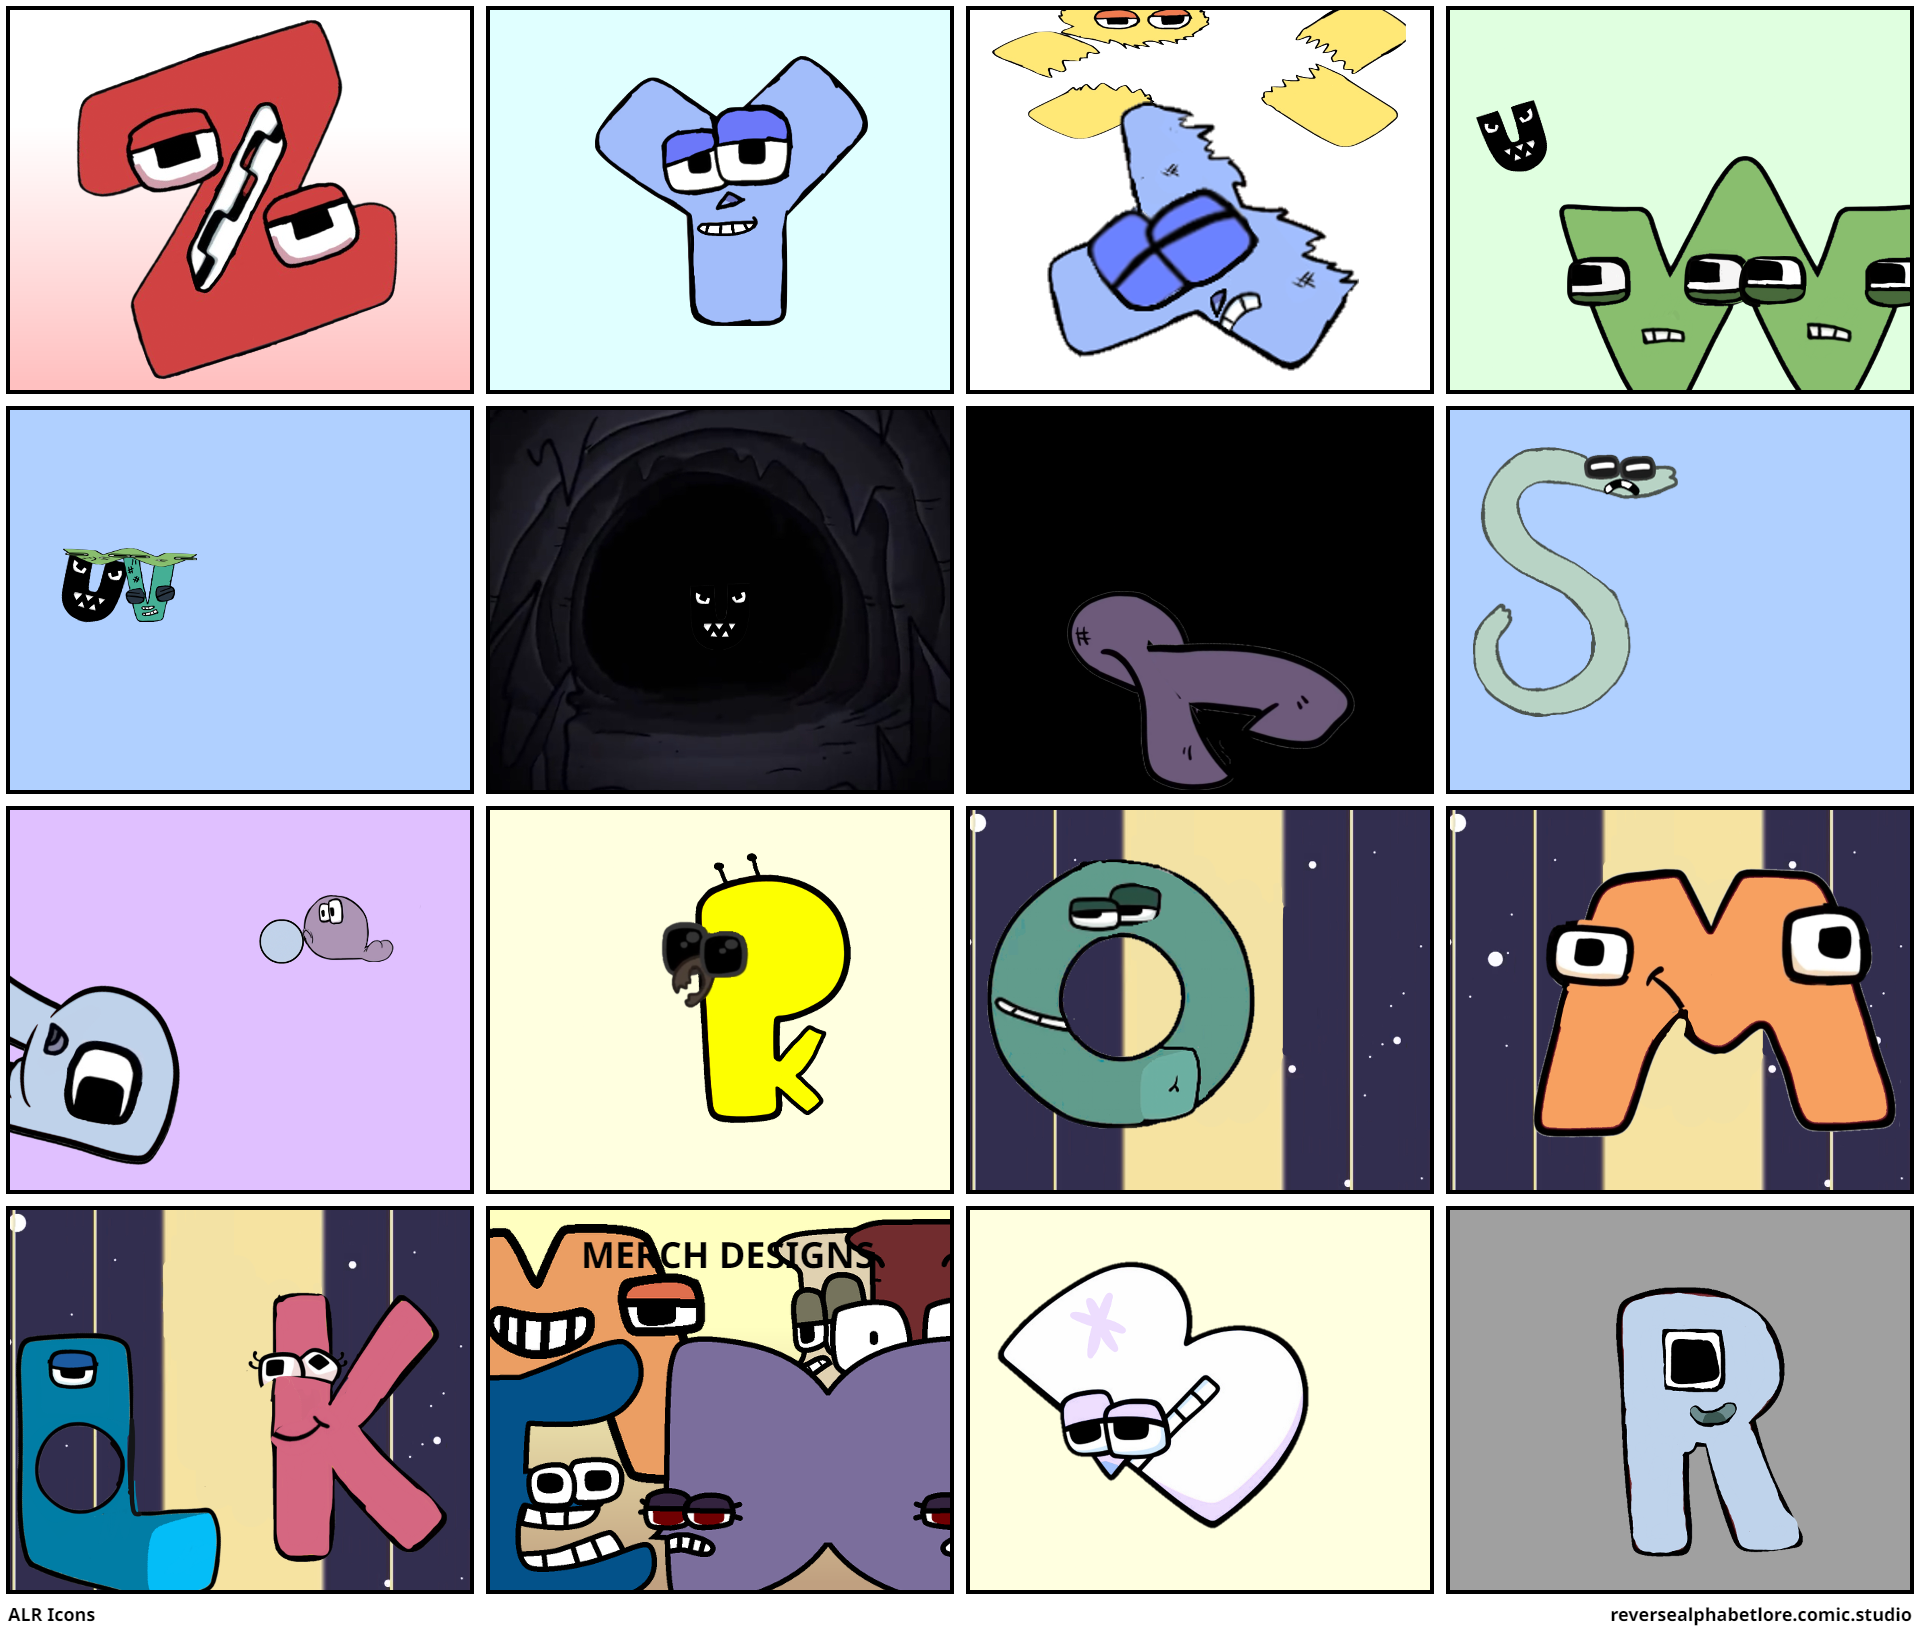 Reverse alphabet lore T. (Collab with DayvidGC) - Comic Studio